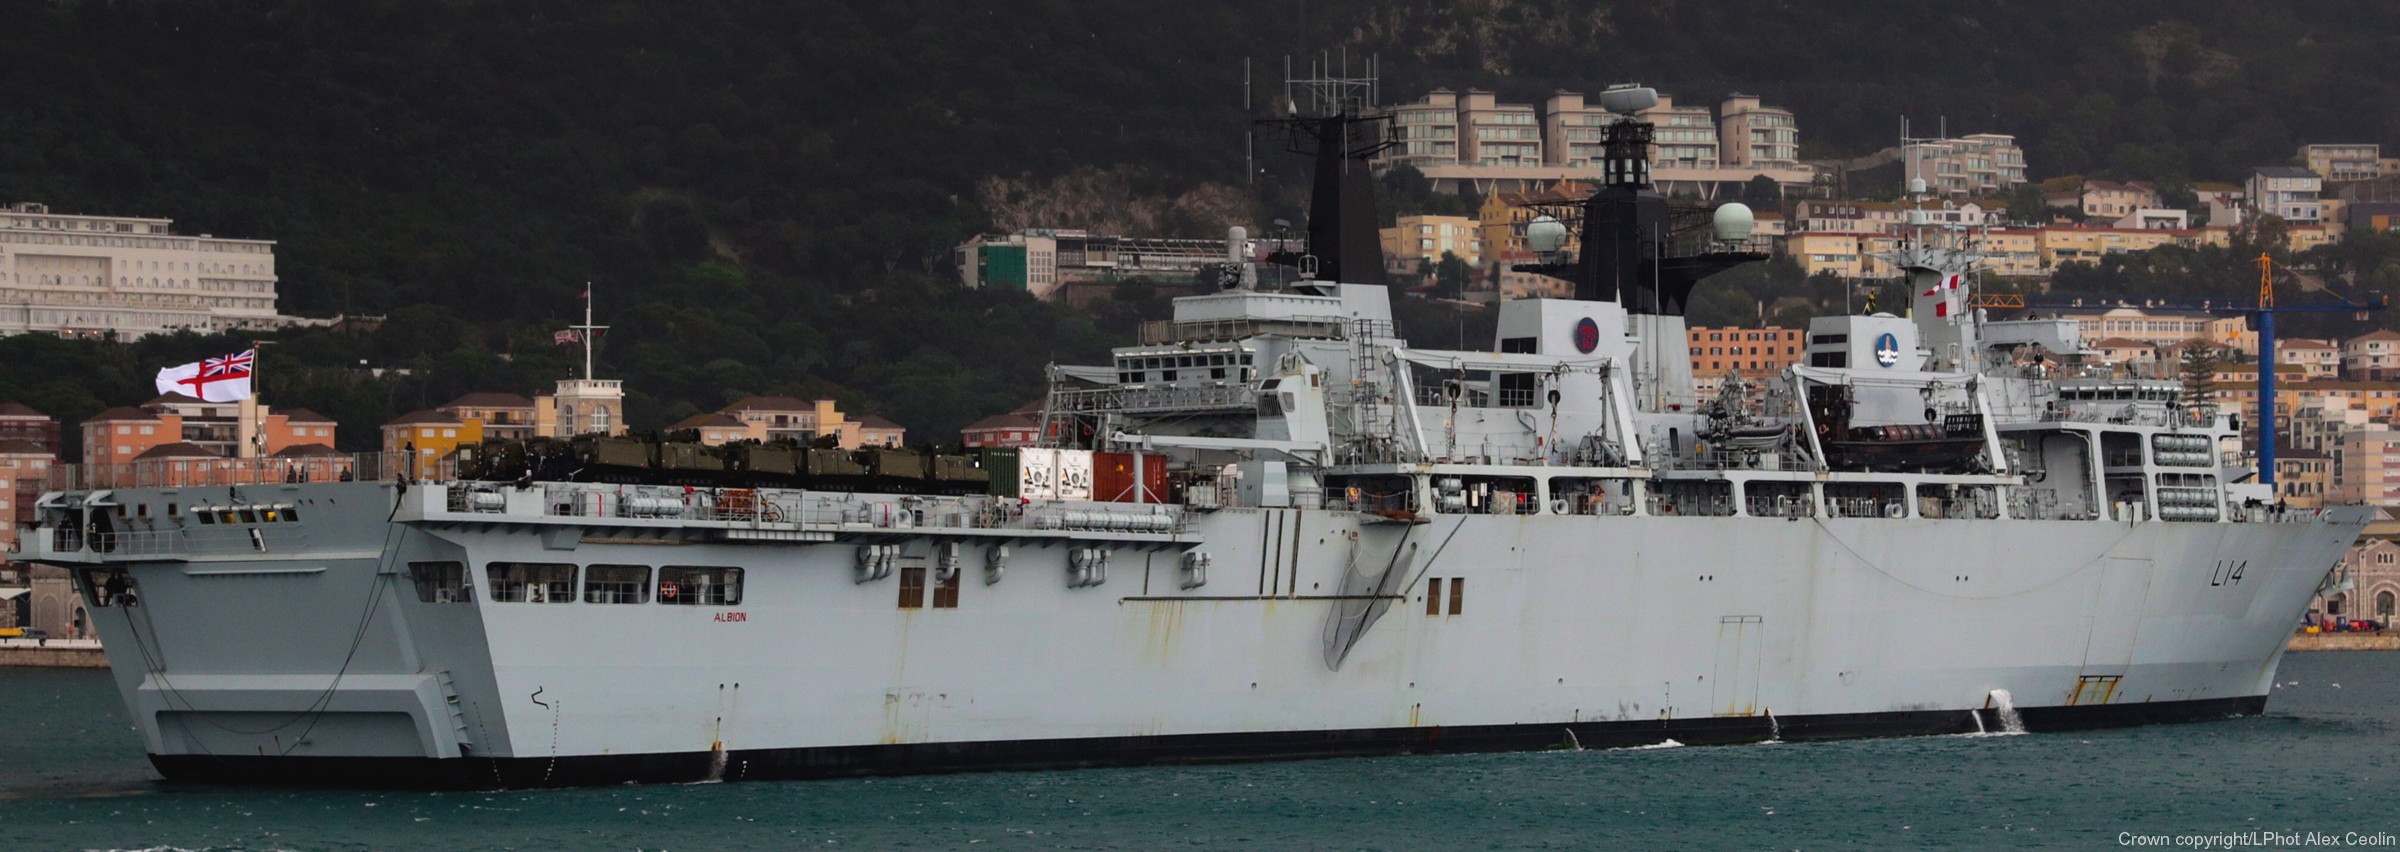 l14 hms albion amphibious transport dock assault ship landing platform lpd royal navy 28